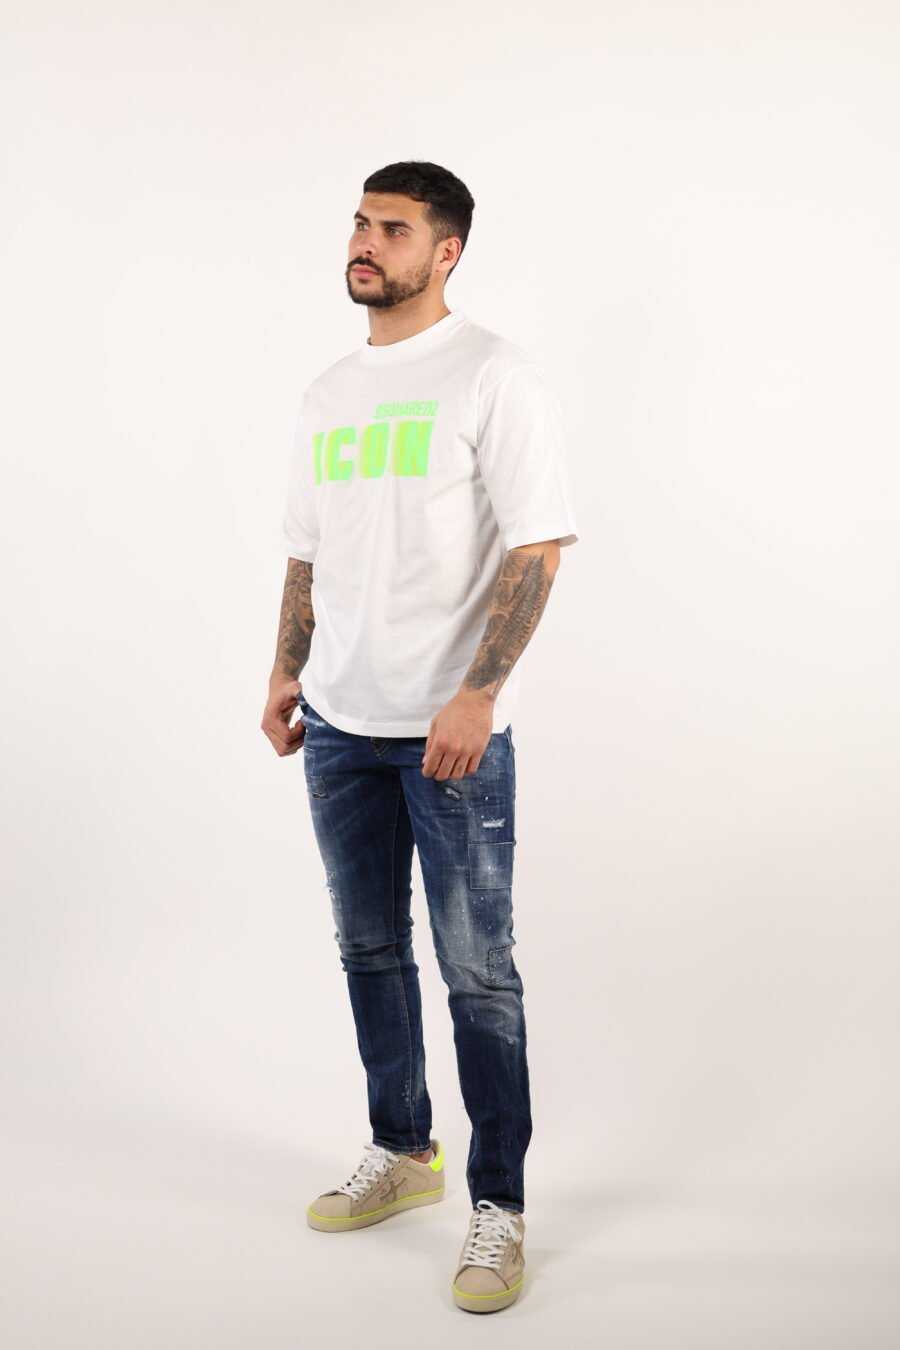 Camiseta blanca "oversize" con maxilogo "icon" verde neon borroso - 109143